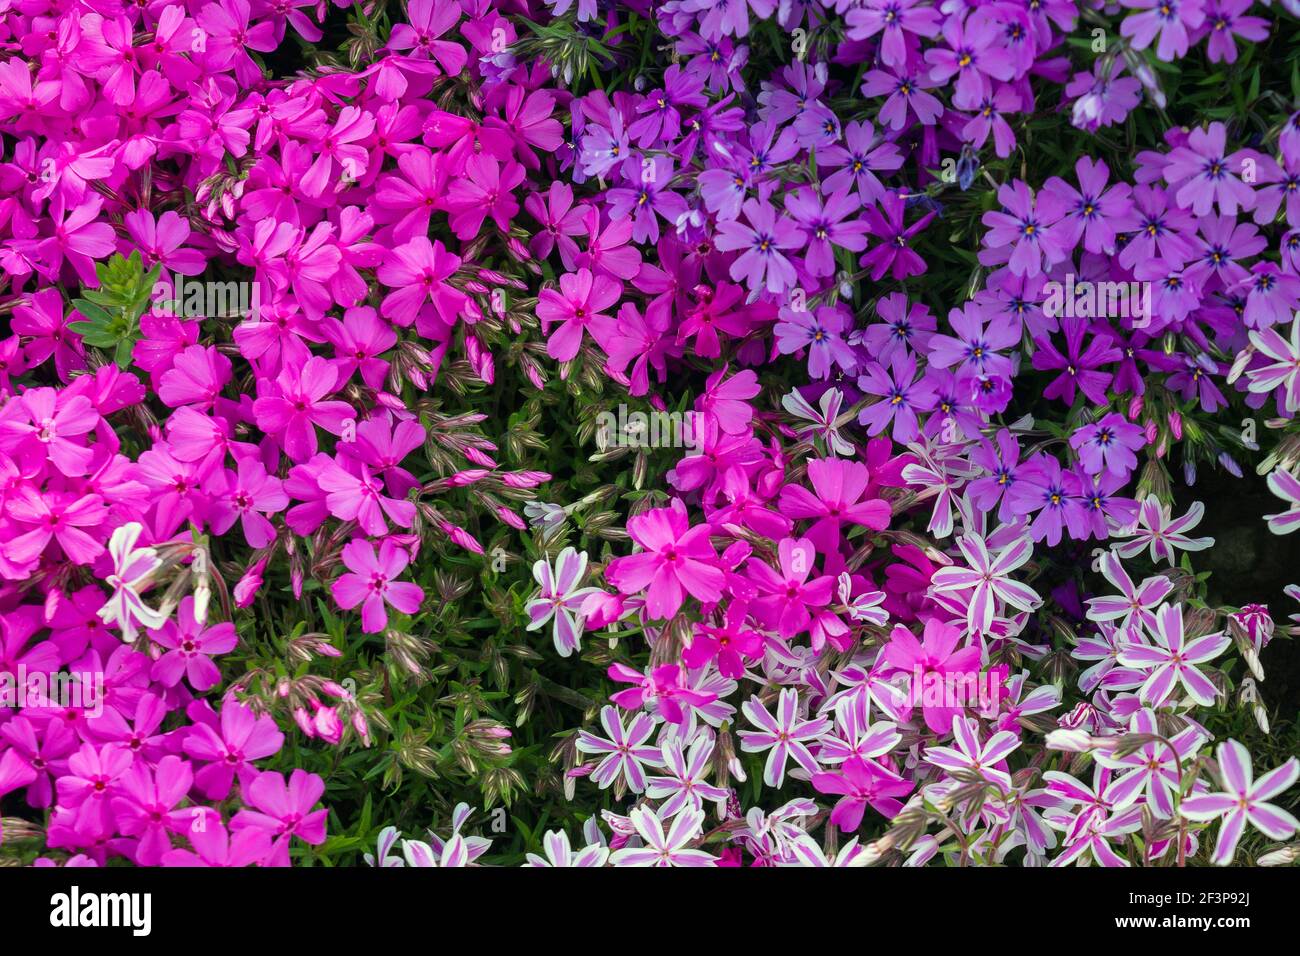 Three colors of the flower Phlox subulata Stock Photo